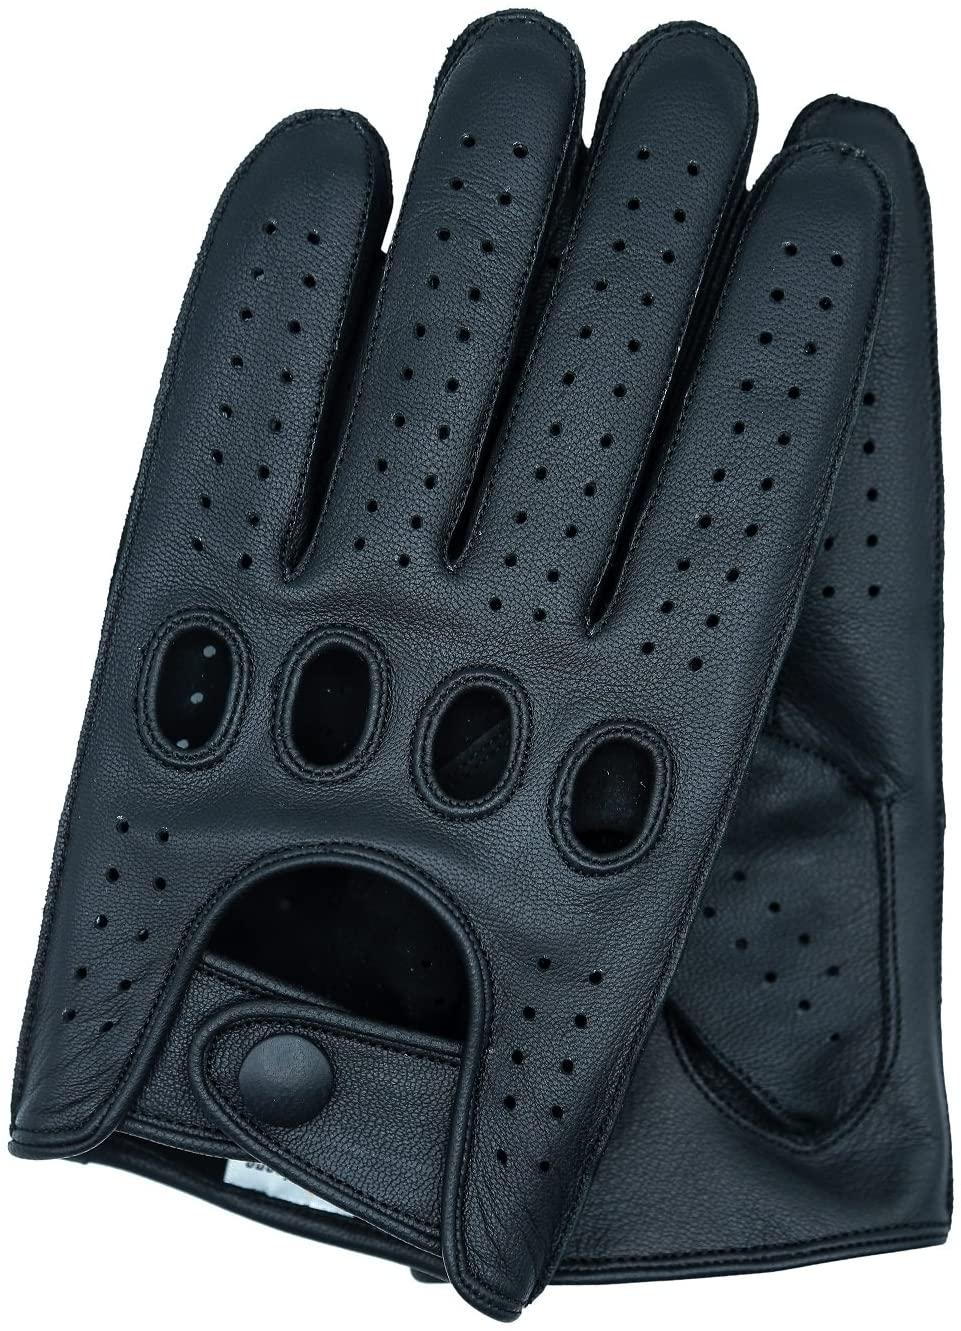 Riparo Men’s Genuine Leather Riding Gloves